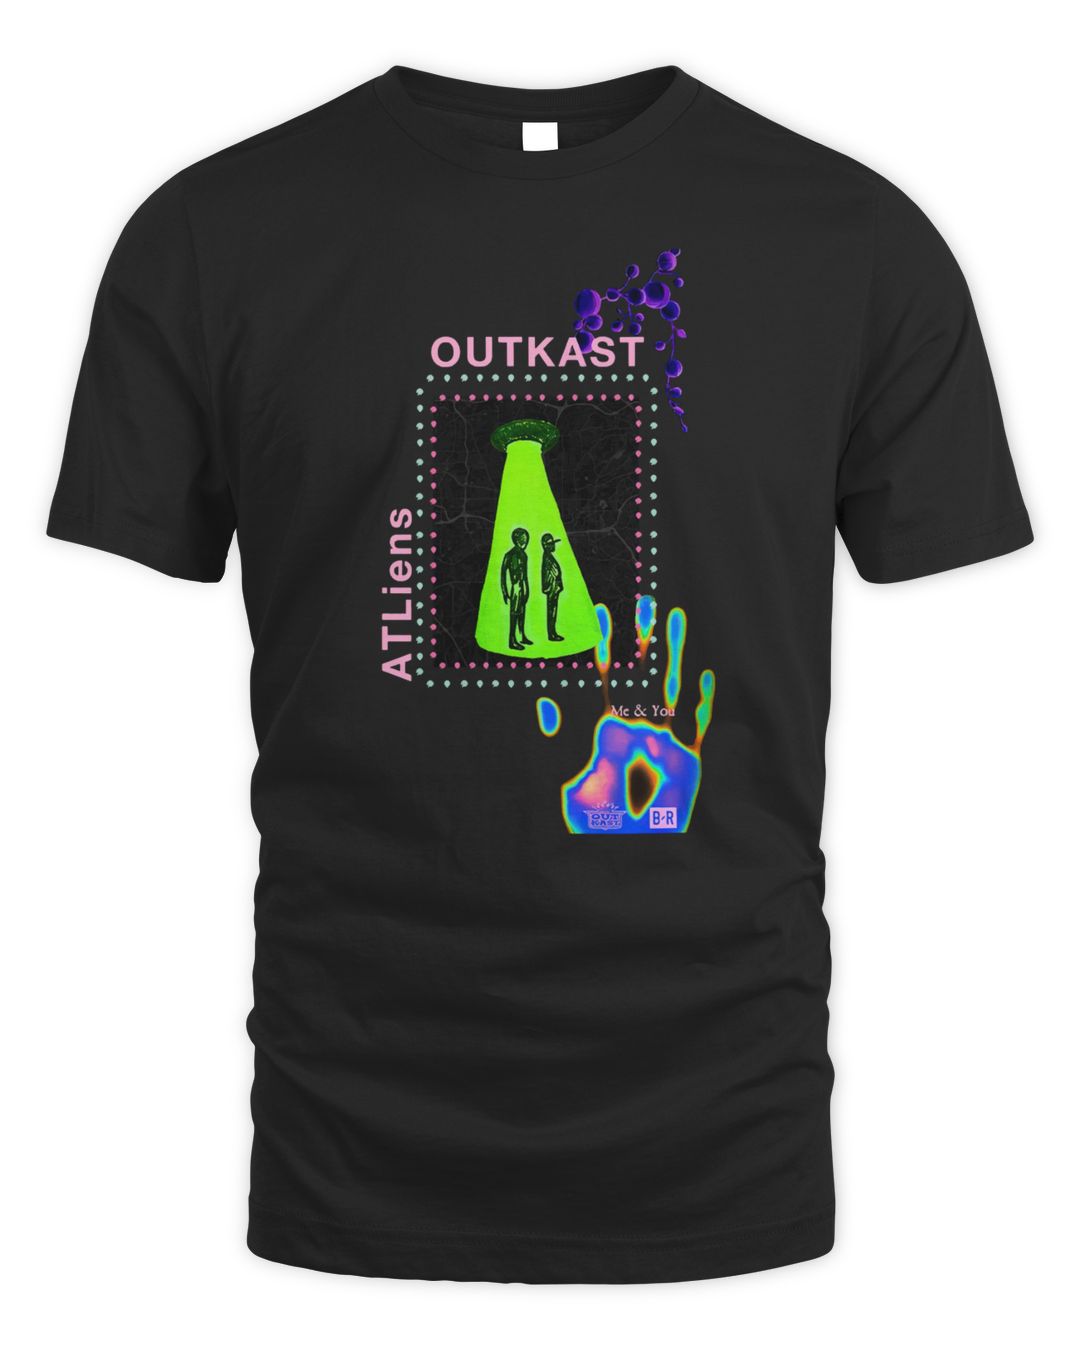 Outkast Merch The Encounter 25th Anniversary Shirt